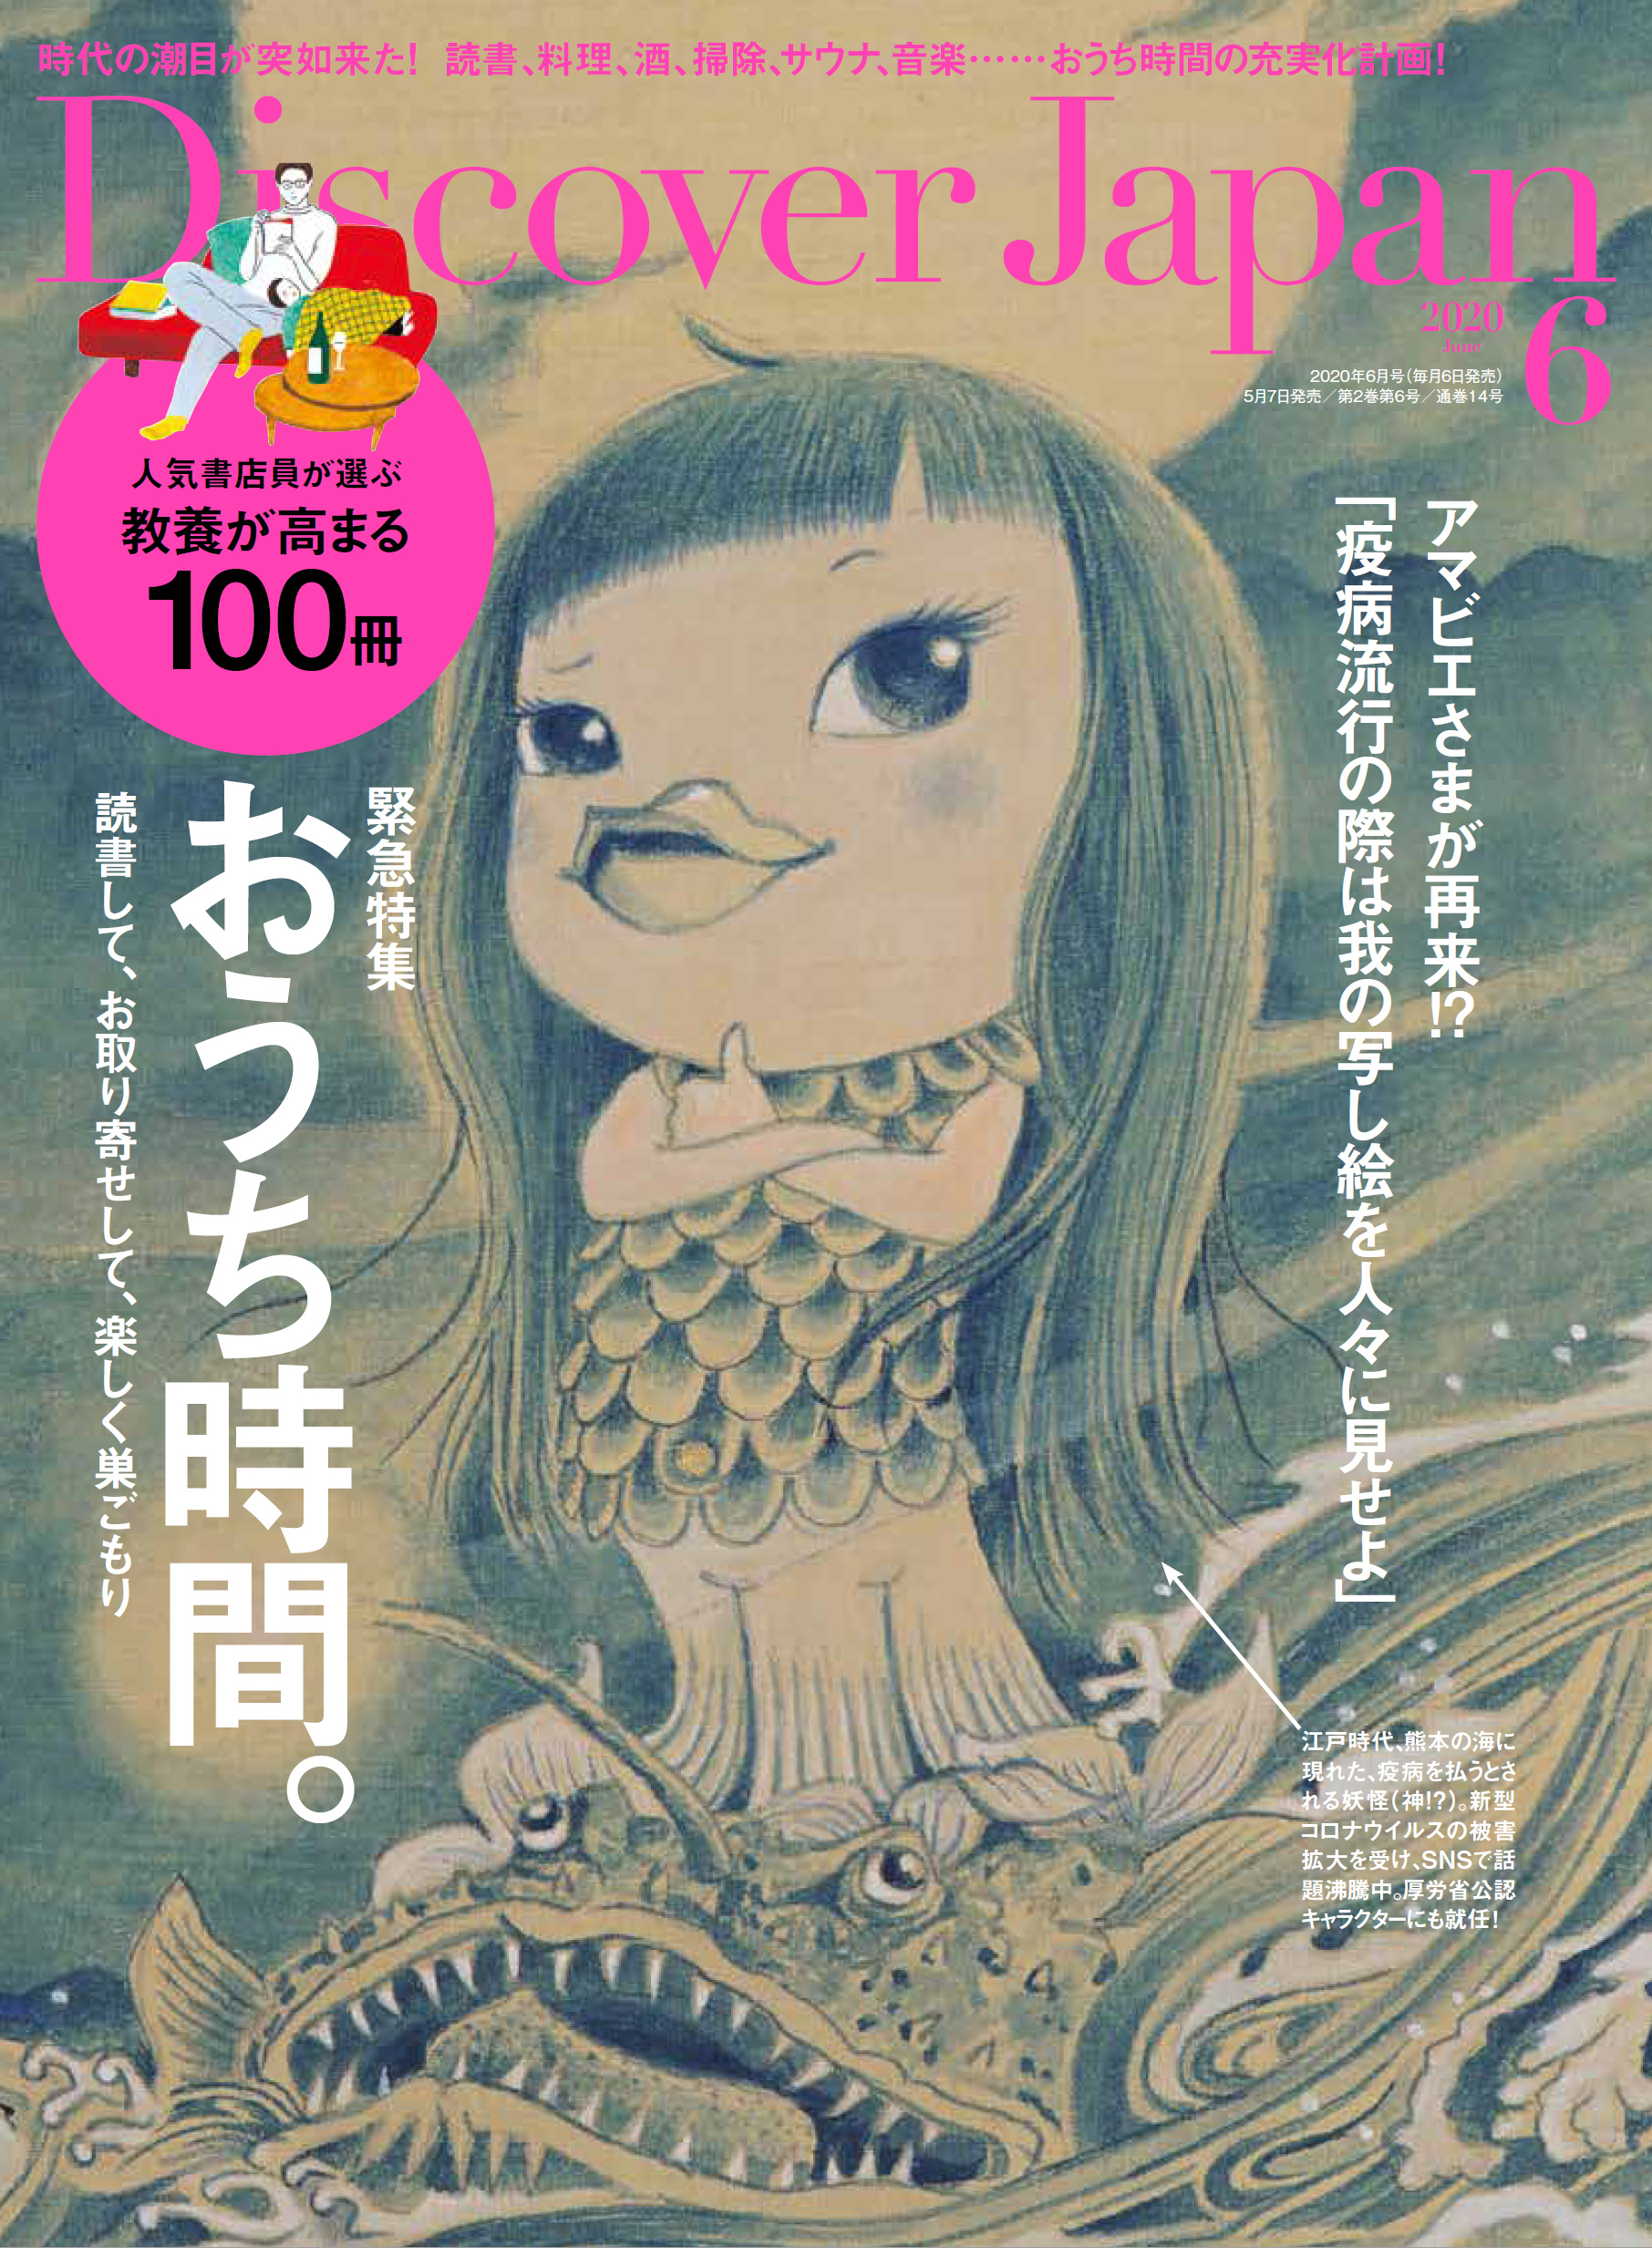 Discover Japan 2020年6月号 vol.104